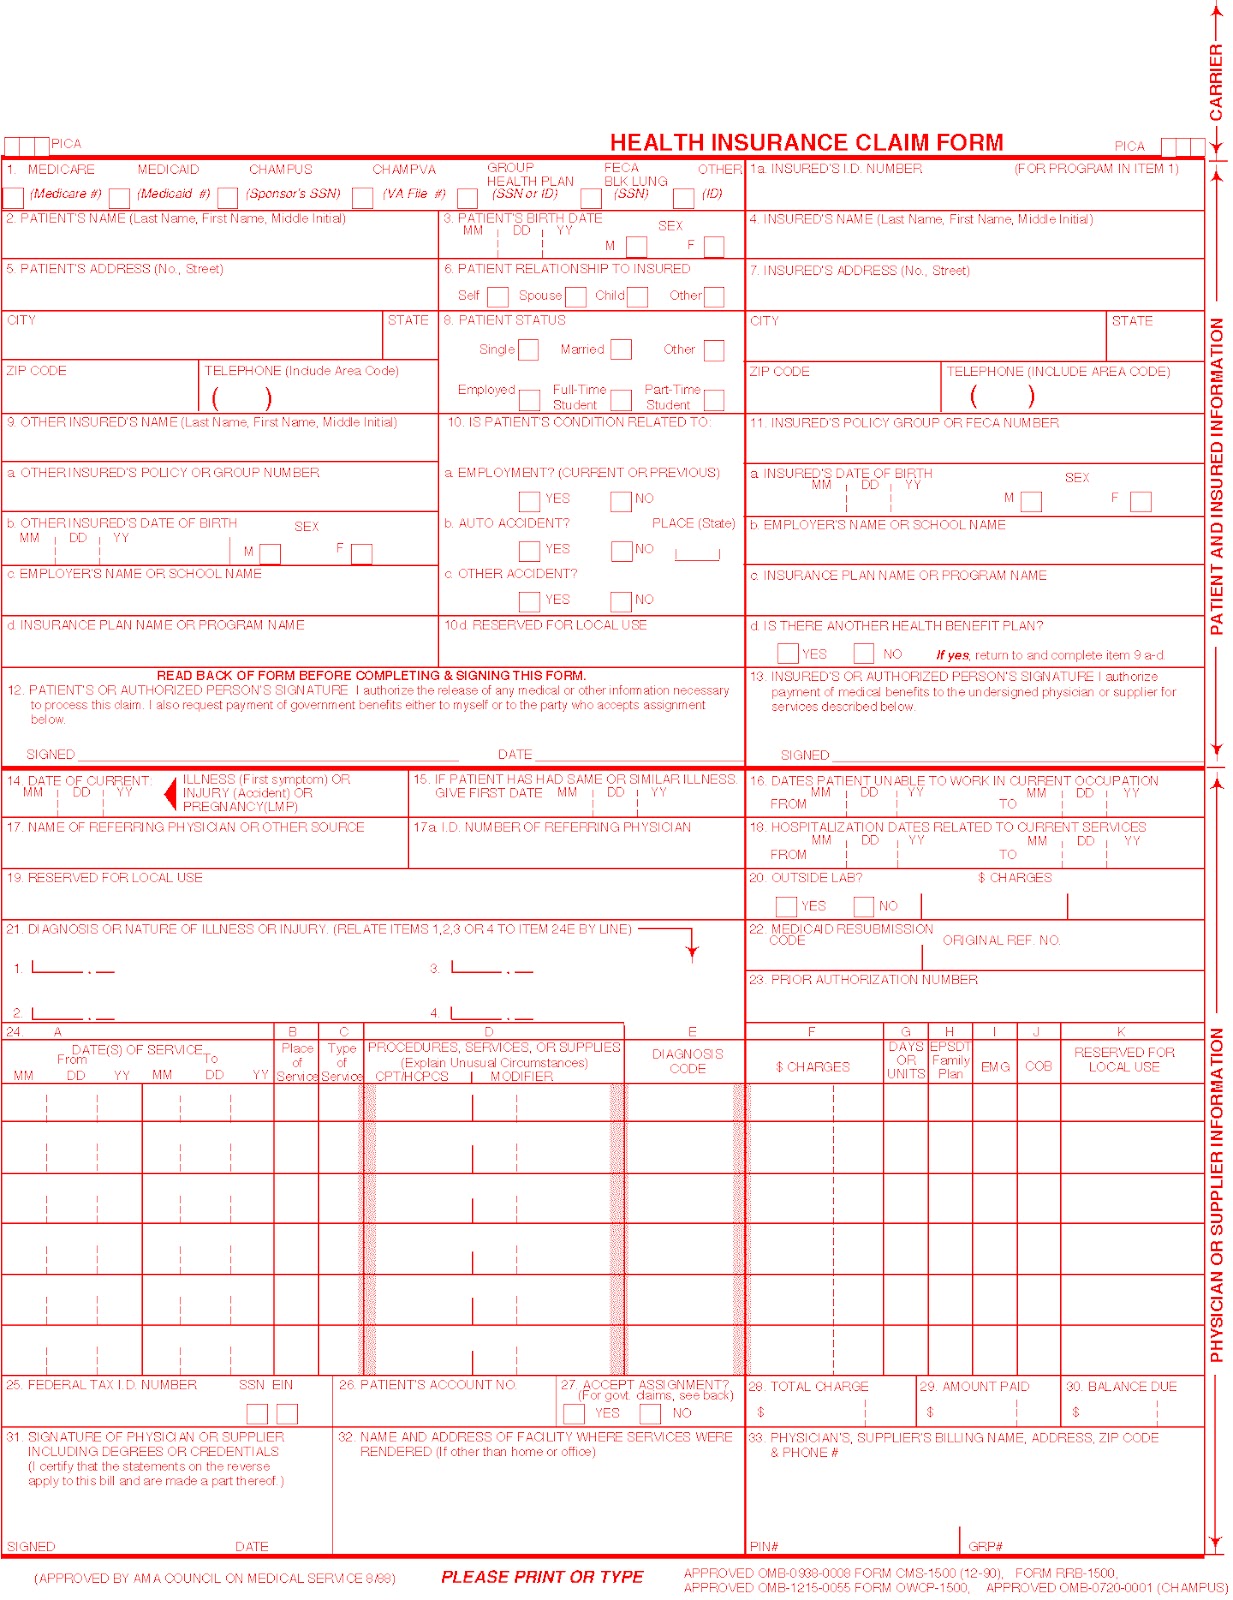 fillable-form-1500-2005-health-insurance-claim-form-printable-pdf